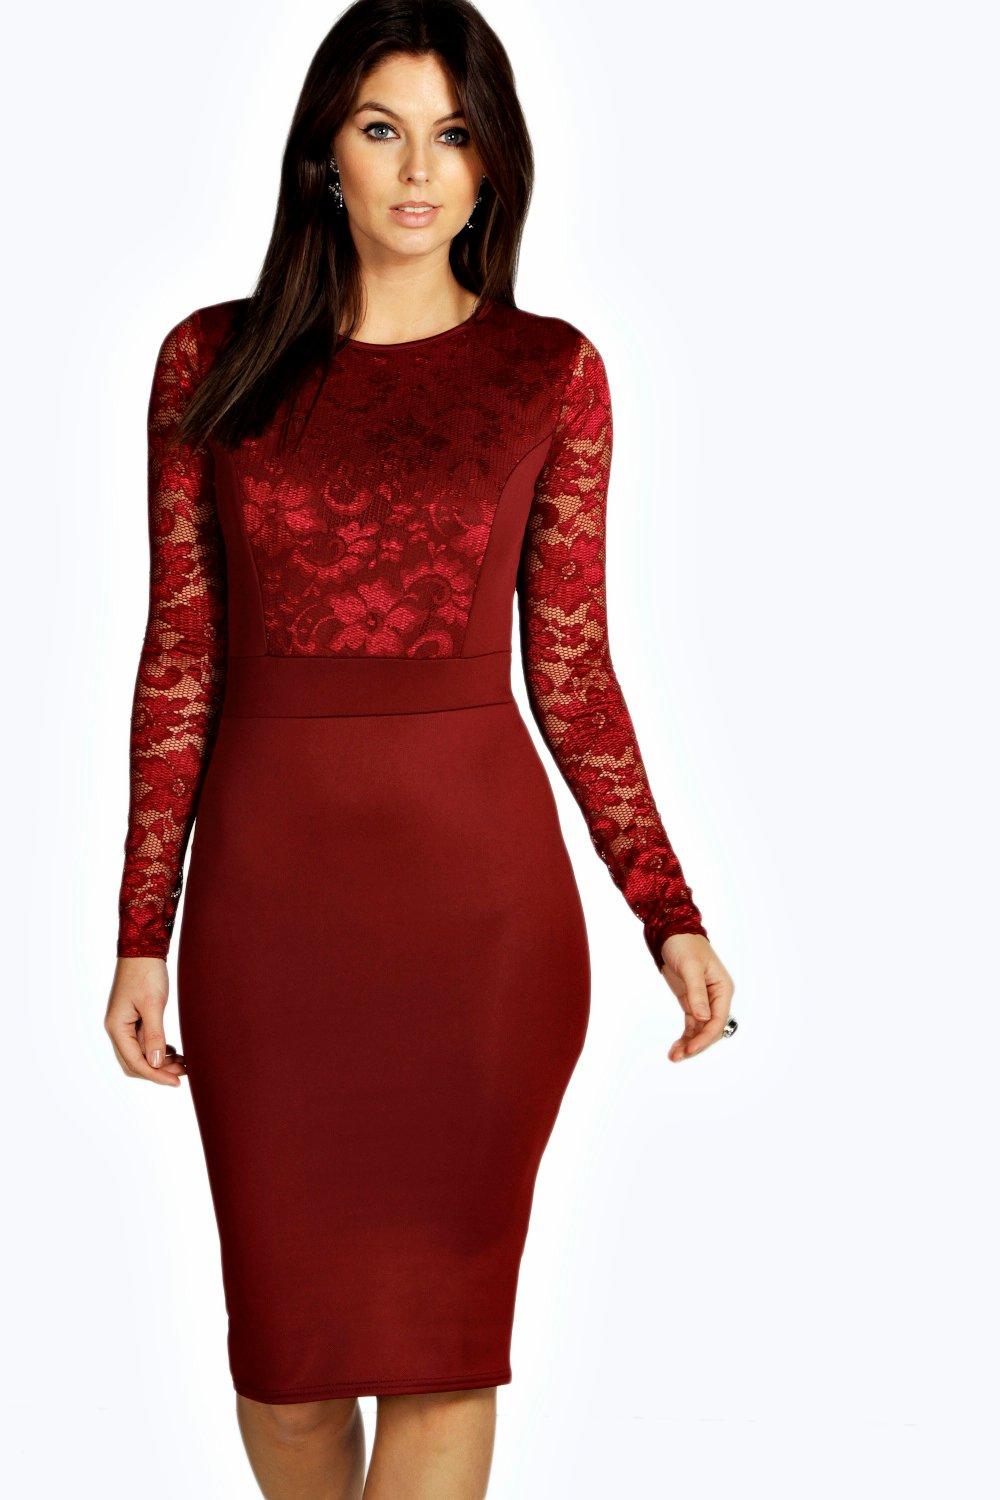 boohoo burgundy lace dress